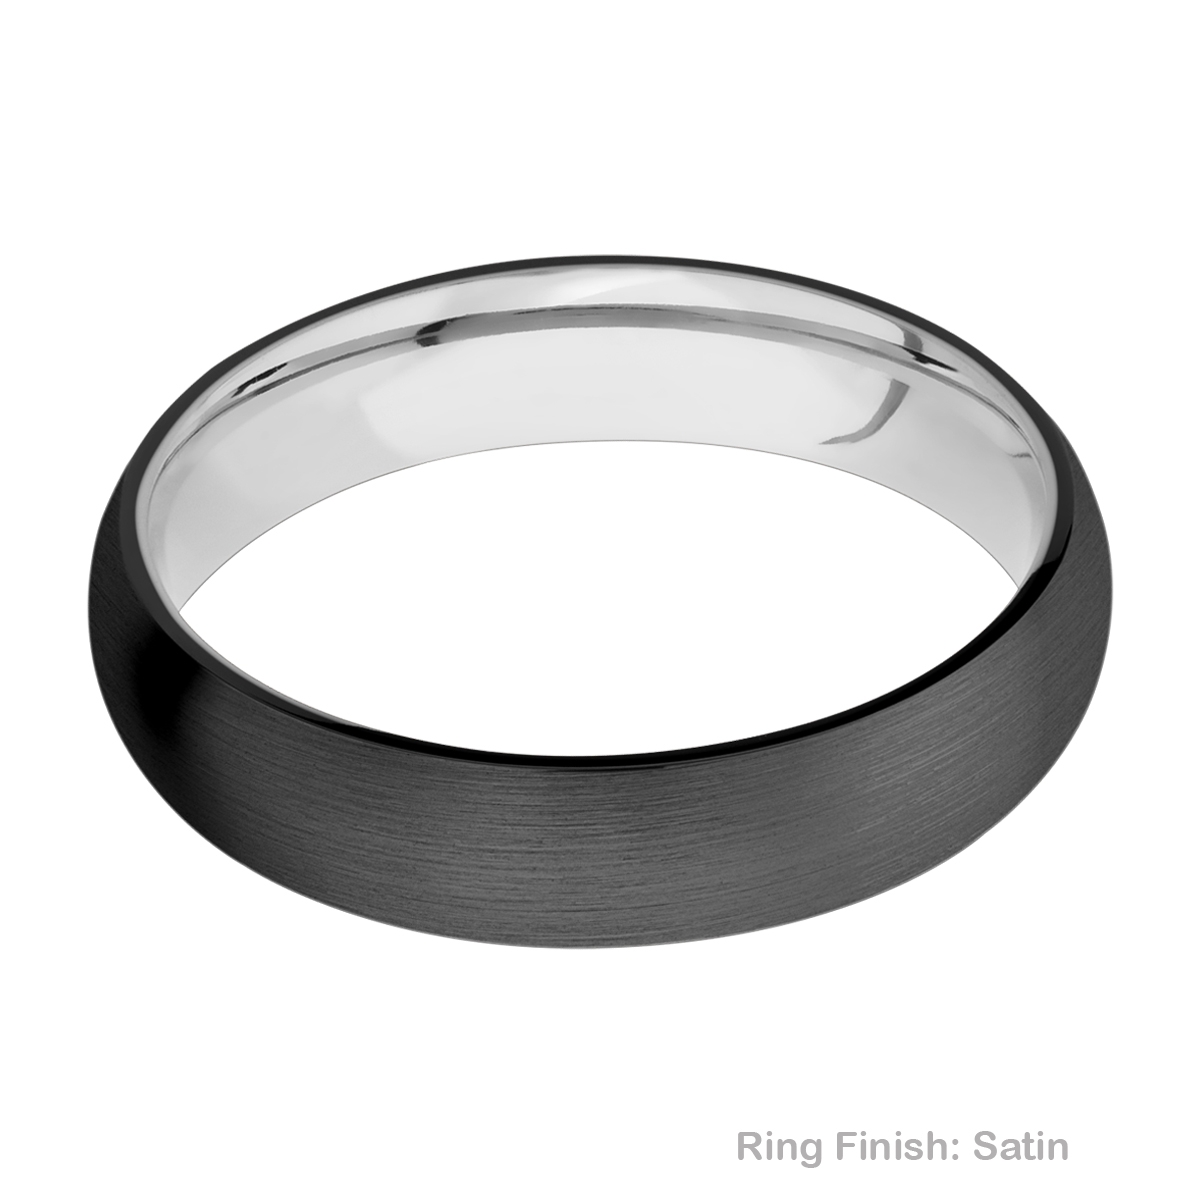 Lashbrook CCSLEEVEZ5D Zirconium and Cobalt Chrome Wedding Ring or Band Alternative View 4